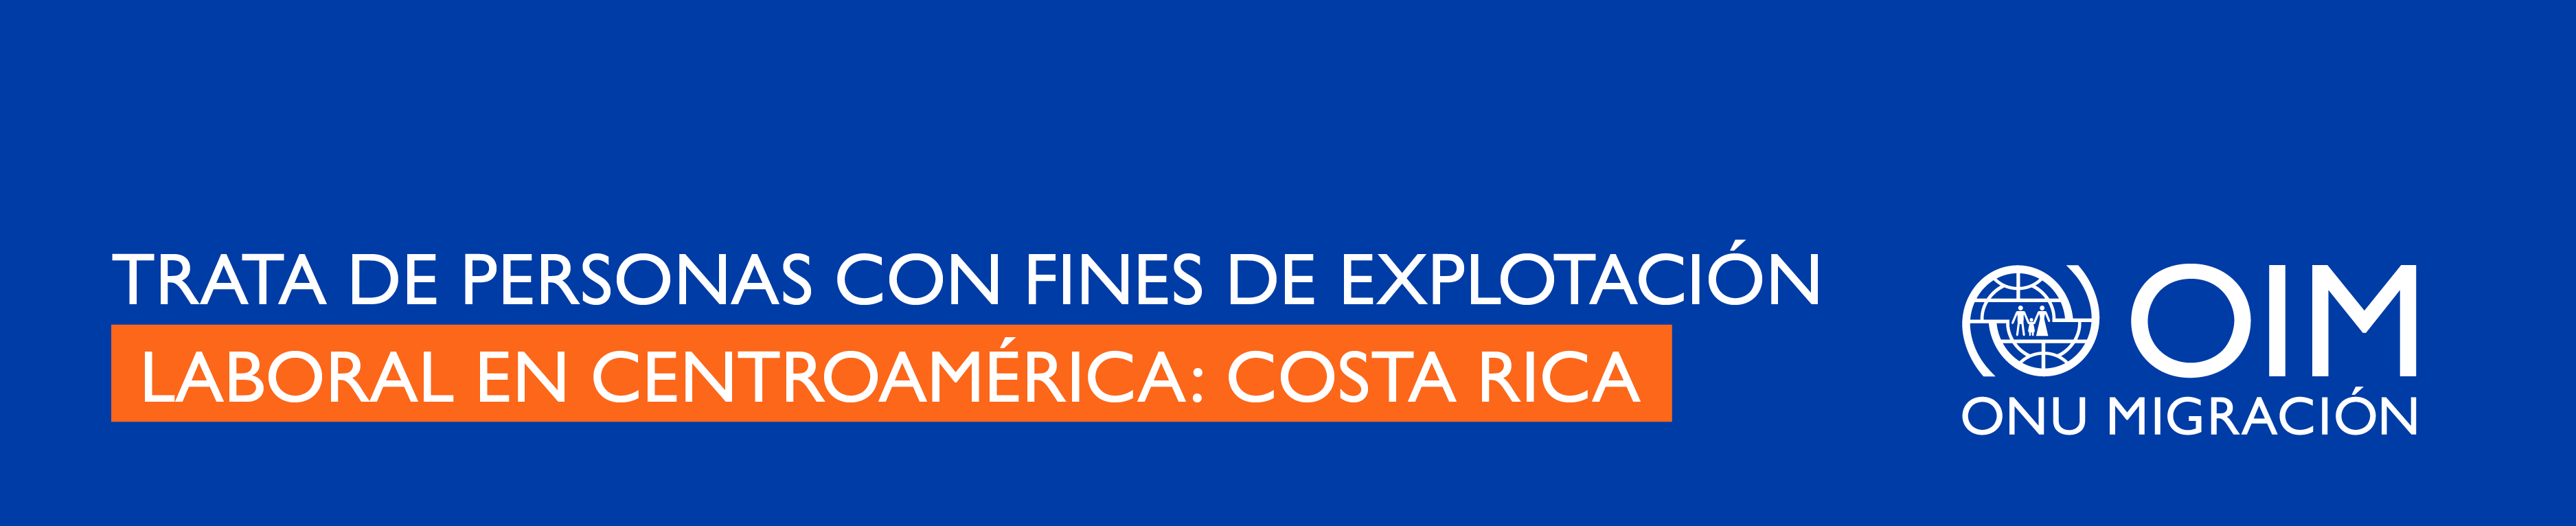 Trata de personas con fines de explotación laboral en Centroamérica: Costa Rica